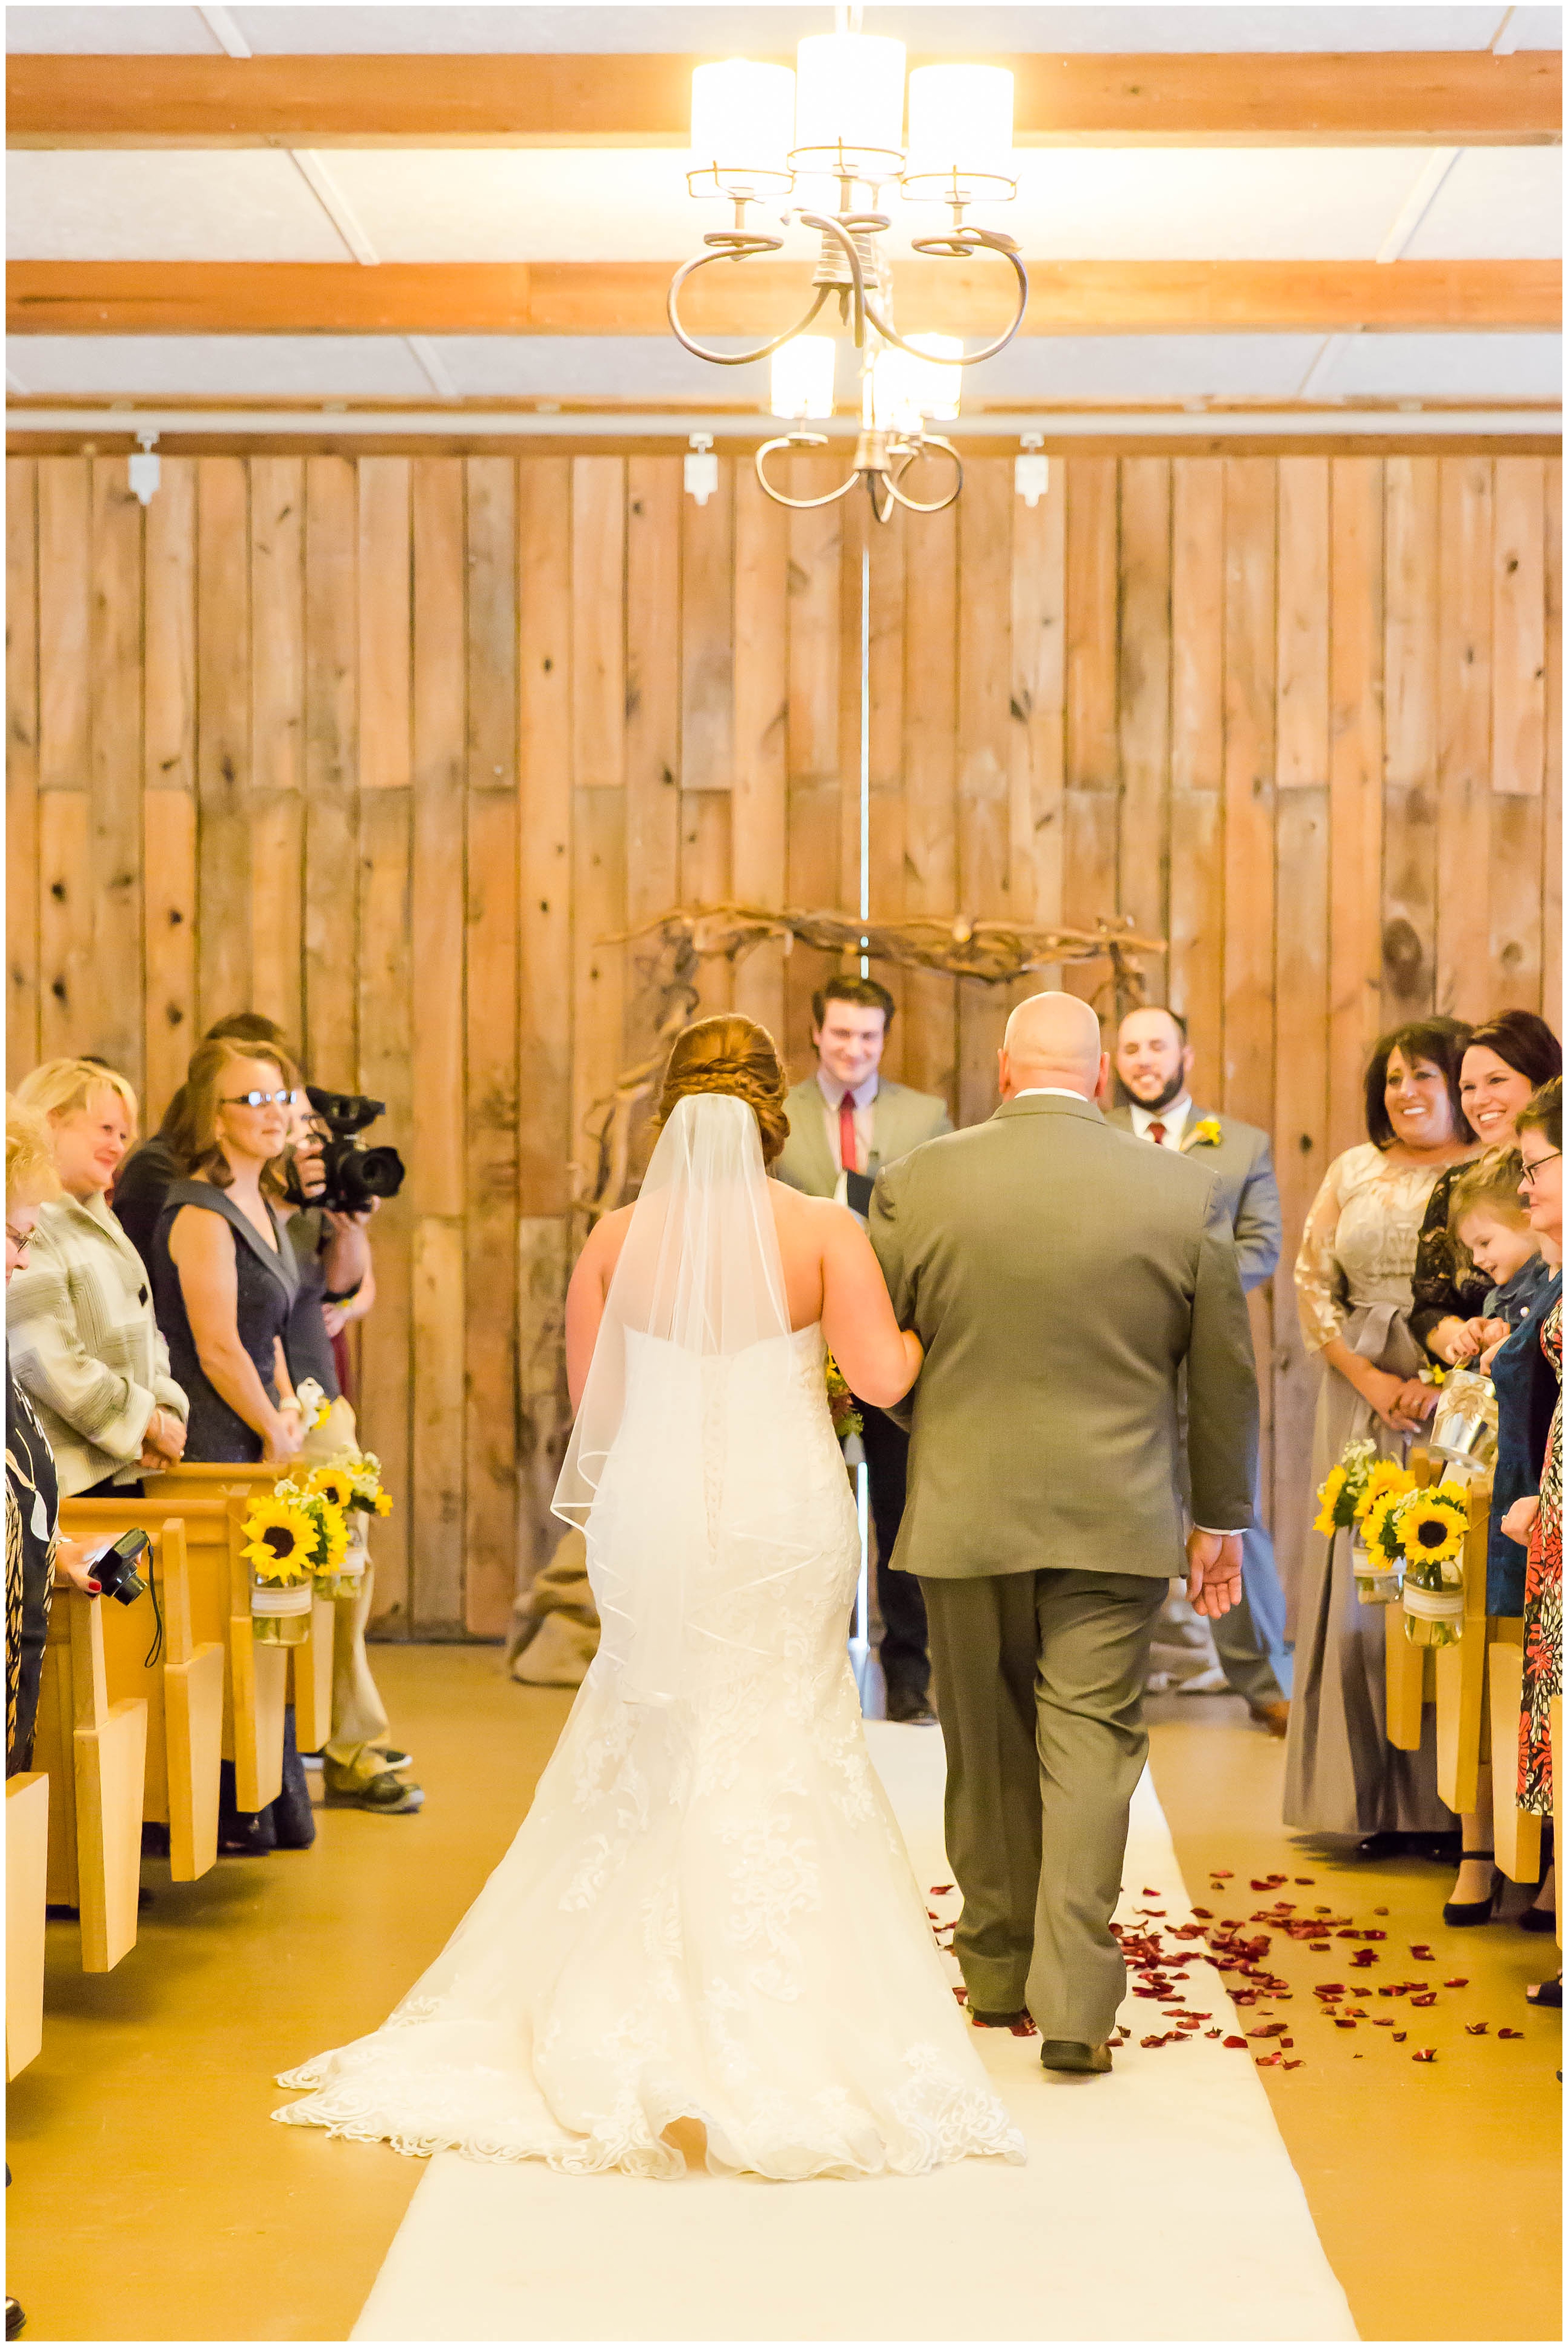 Bouquet Studio,Fall Brookside Farm wedding,loren jackson photography,photographer akron ohio,rustic barn wedding,sunflower bouquet,work shed weddings,